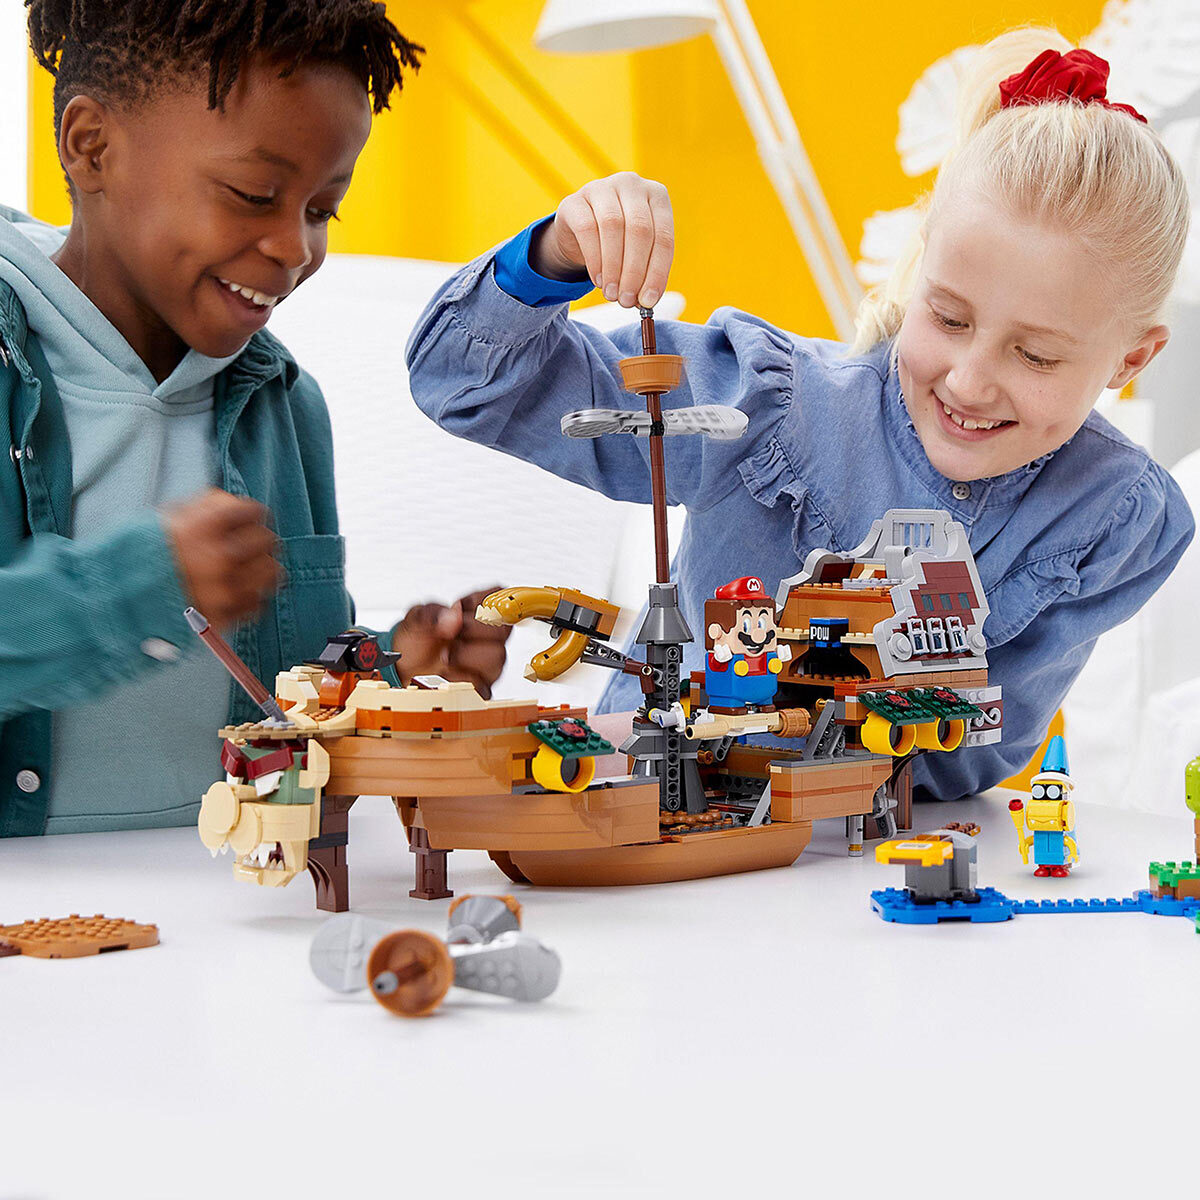 Buy LEGO Super Mario Bowser's Airship Expansion Set Lifestyle Image at Costco.co.uk